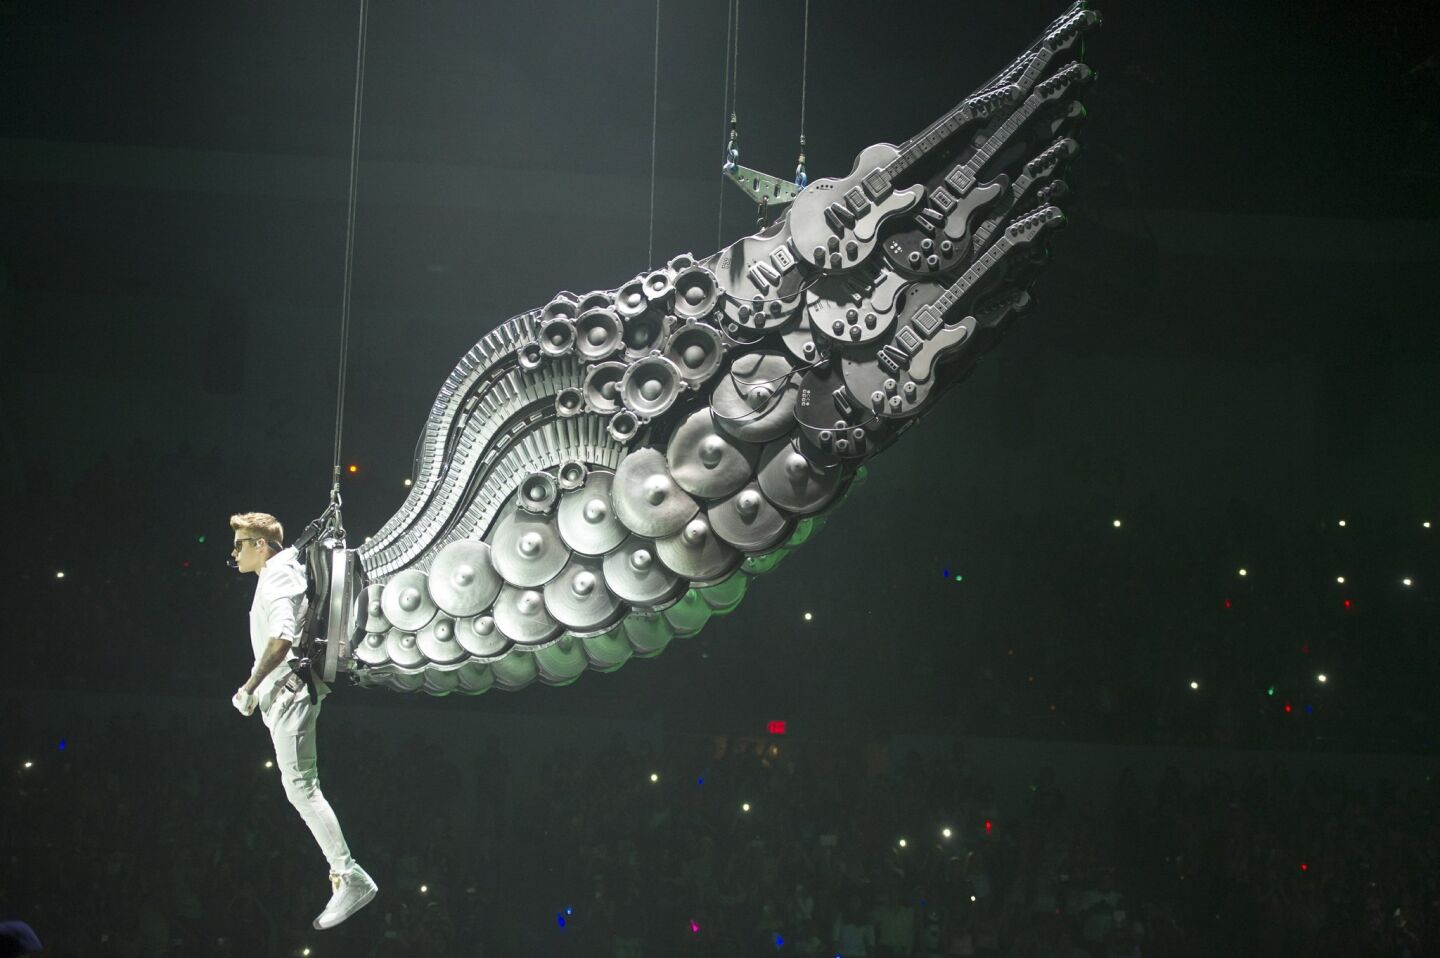 Bieber's "Believe Tour"